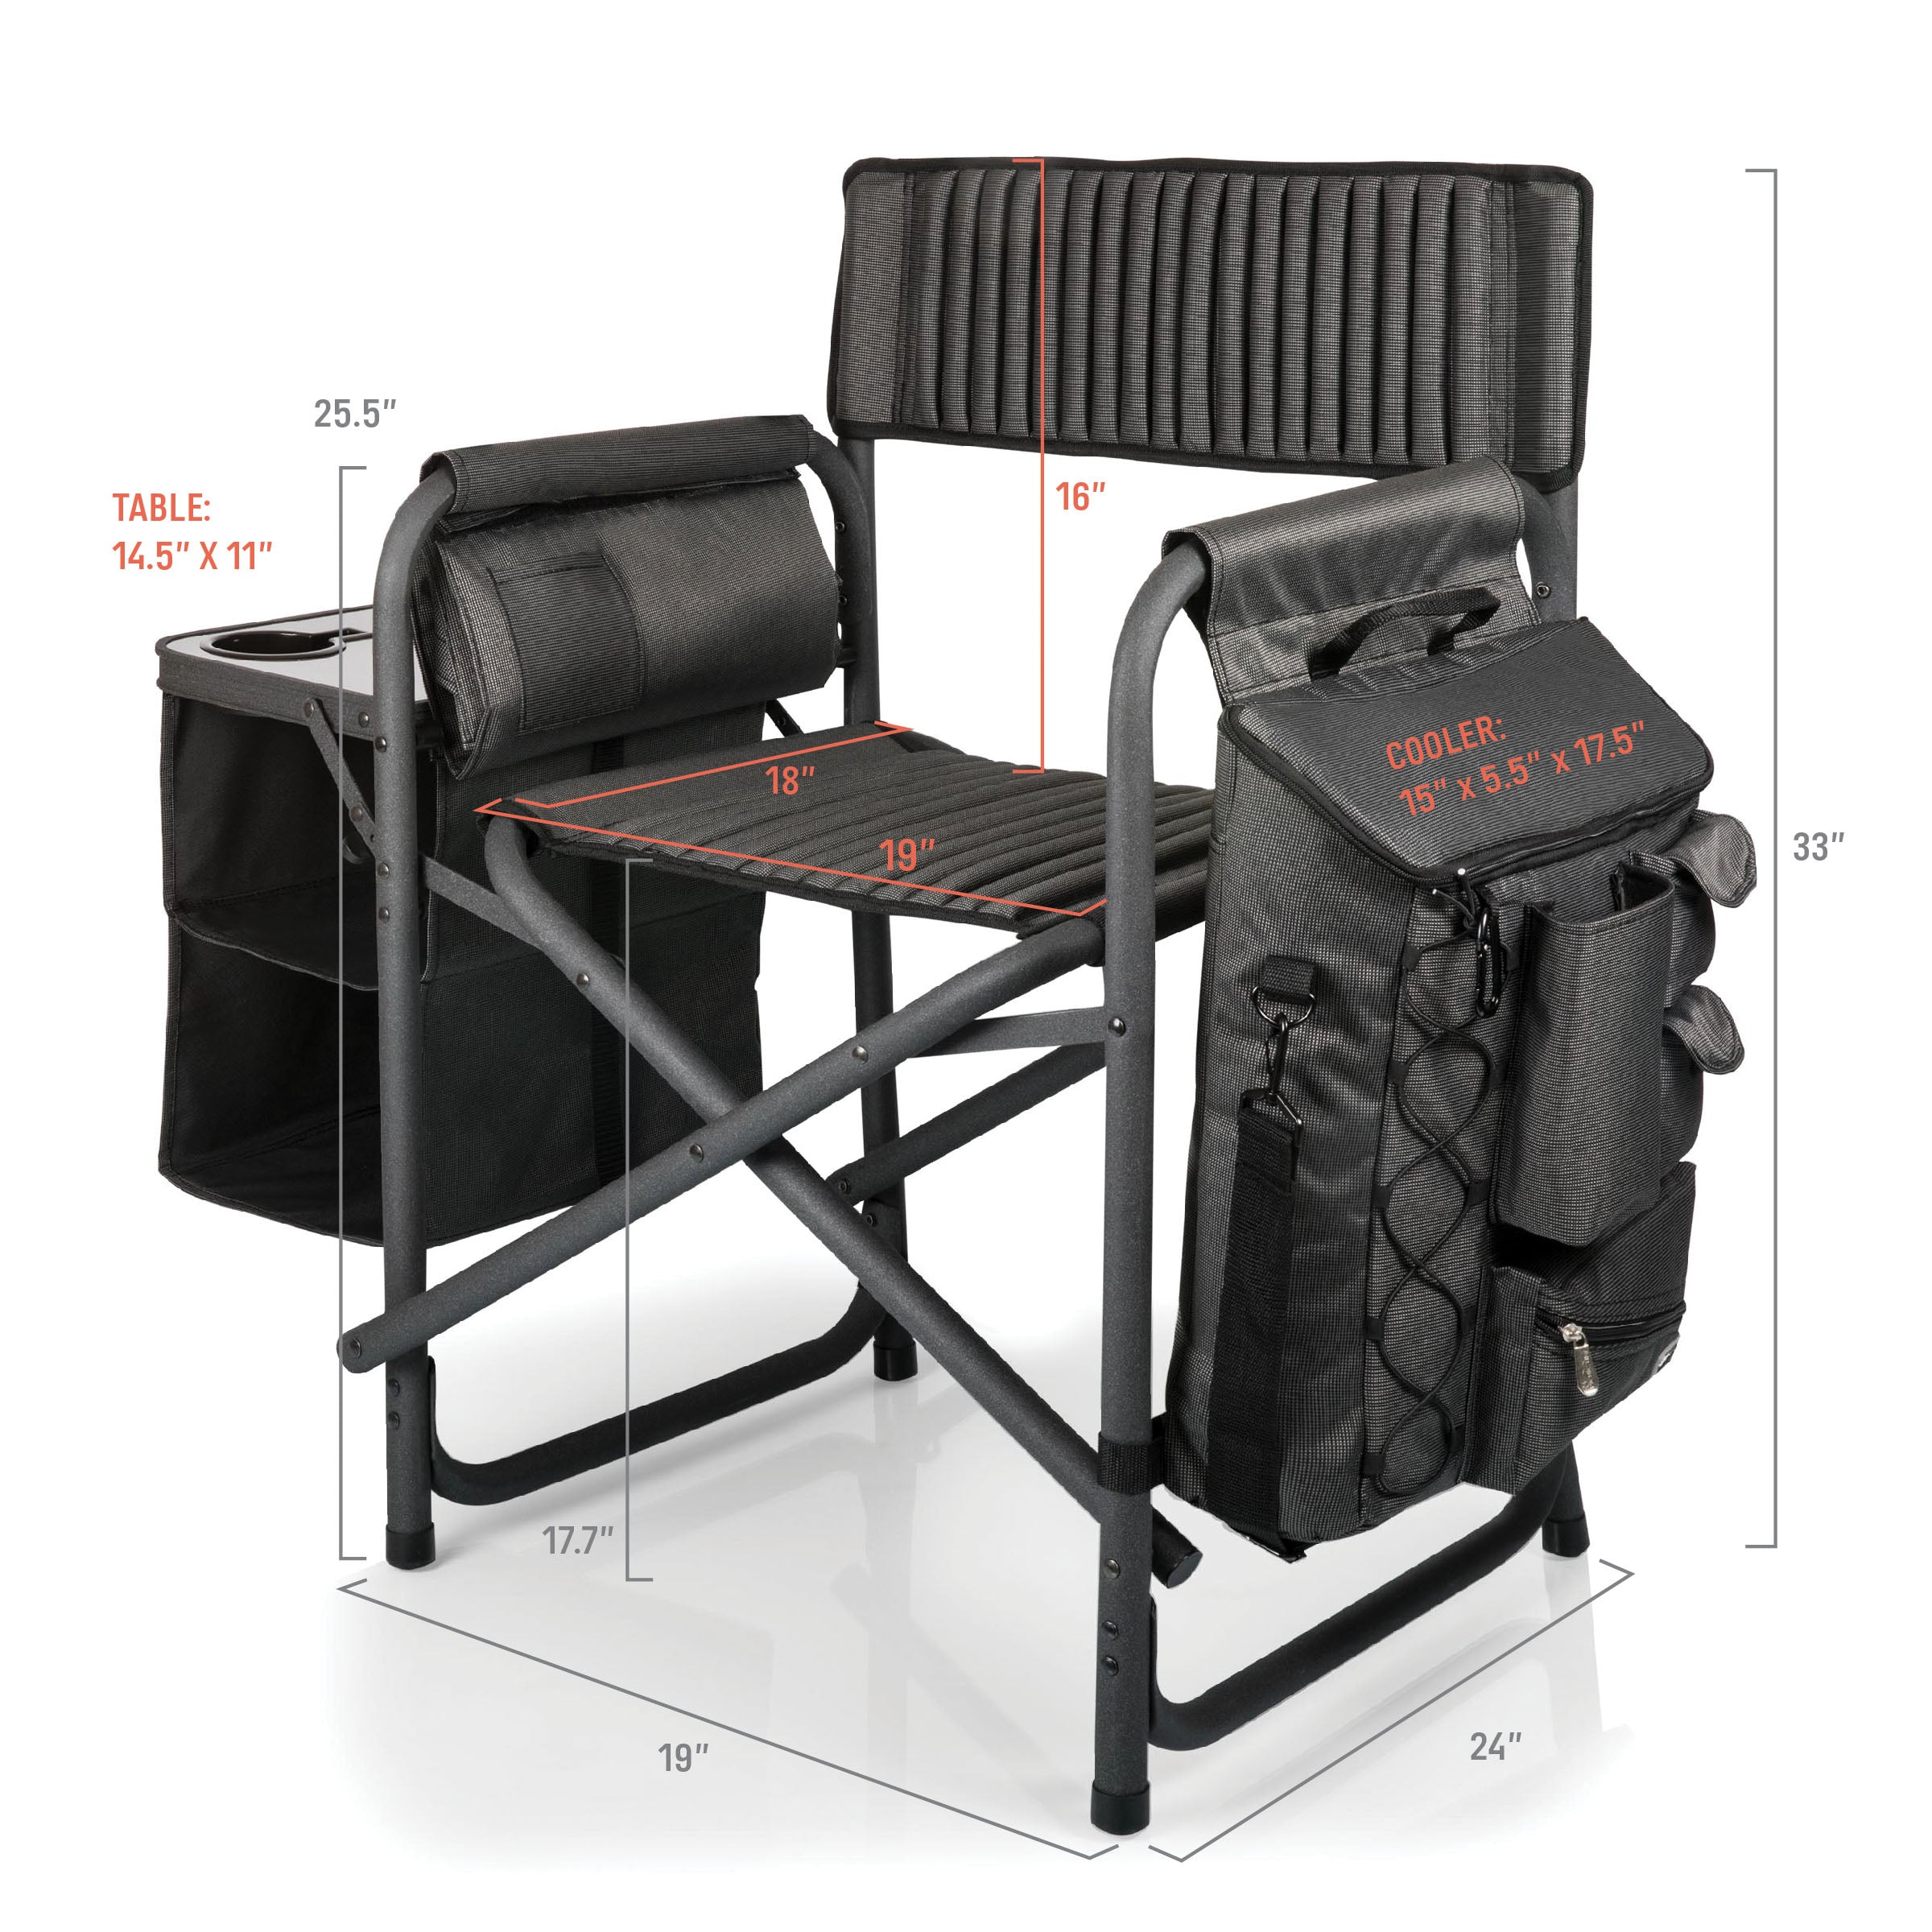 Oklahoma State Cowboys - Fusion Camping Chair